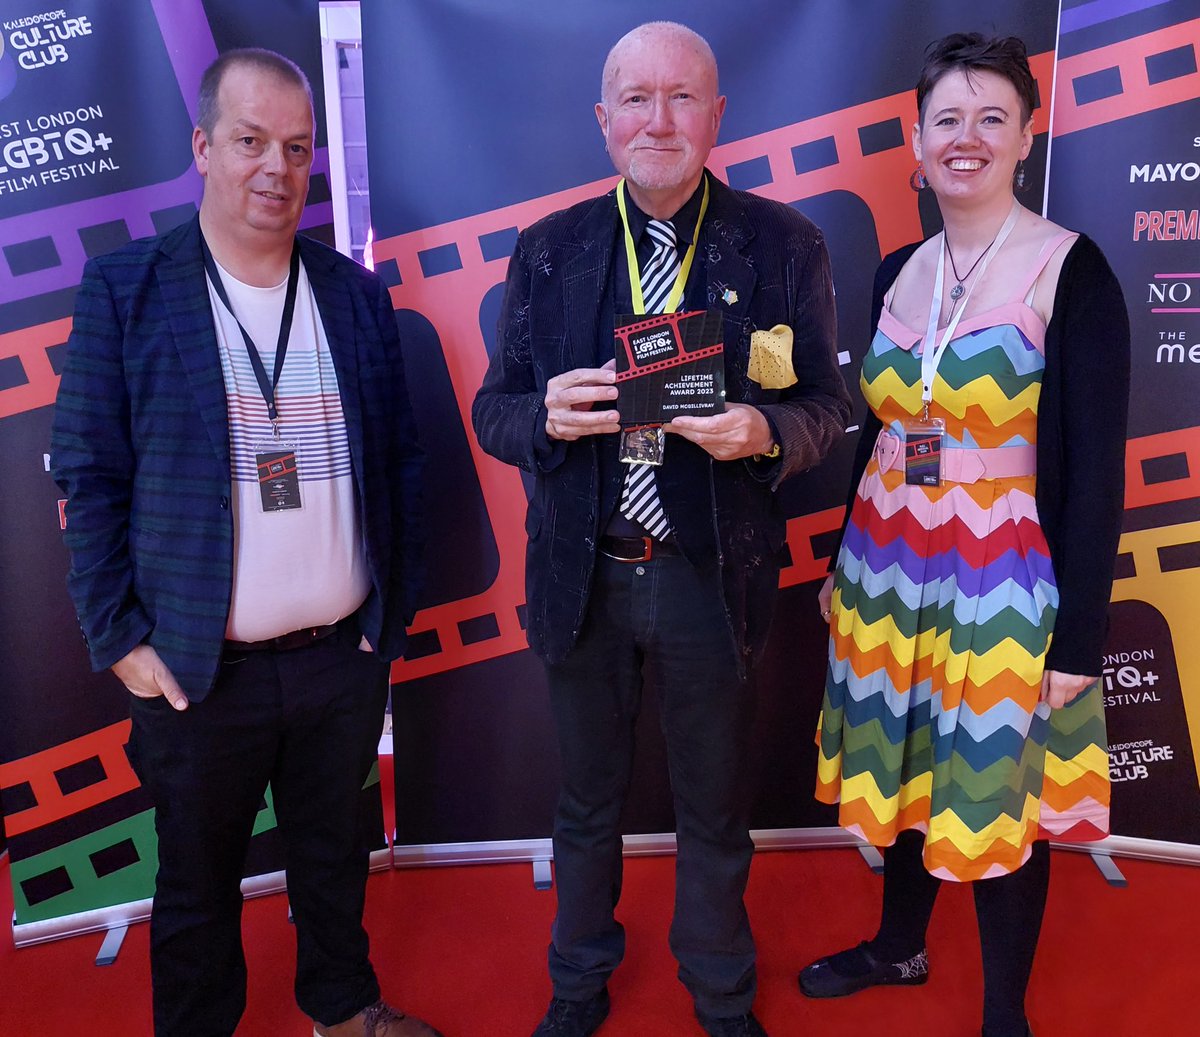 #davidmcgillivray wins a  #lifetimeachievementaward #eastlondonlgbtqfilmfestival #LGBTQ